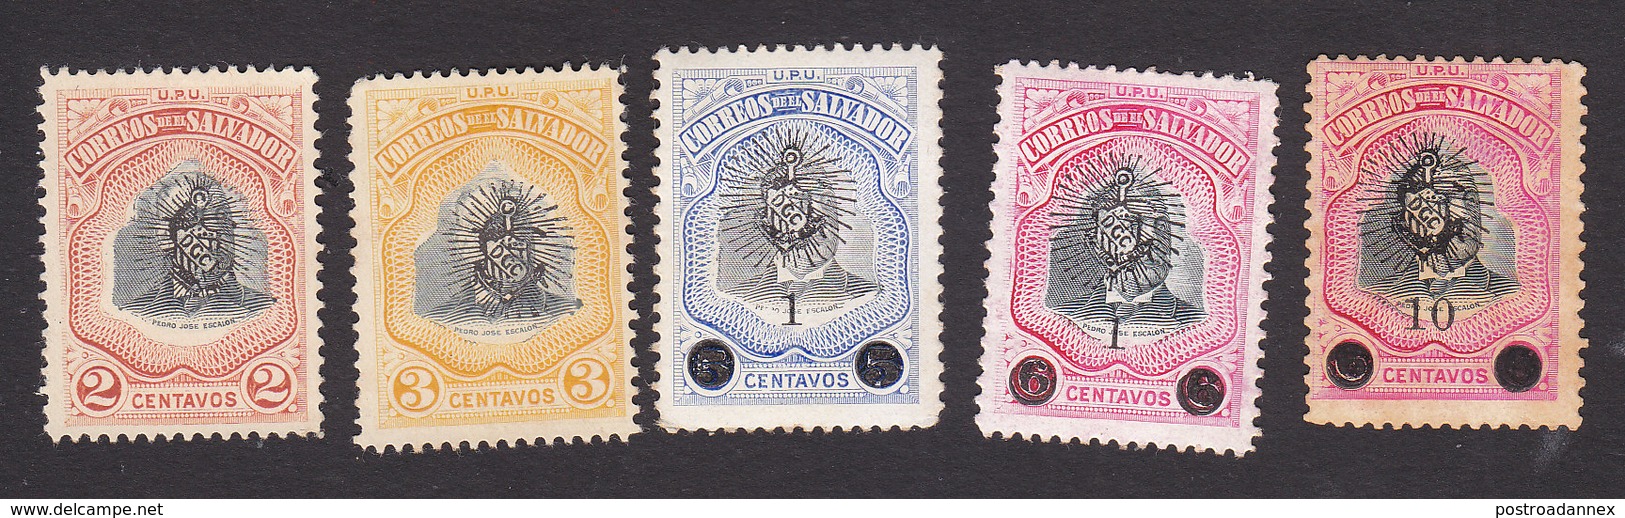 El Salvador, Scott #350-354, Mint Hinged, President Escalon Overprinted And Surcharged, Issued 1907 - El Salvador